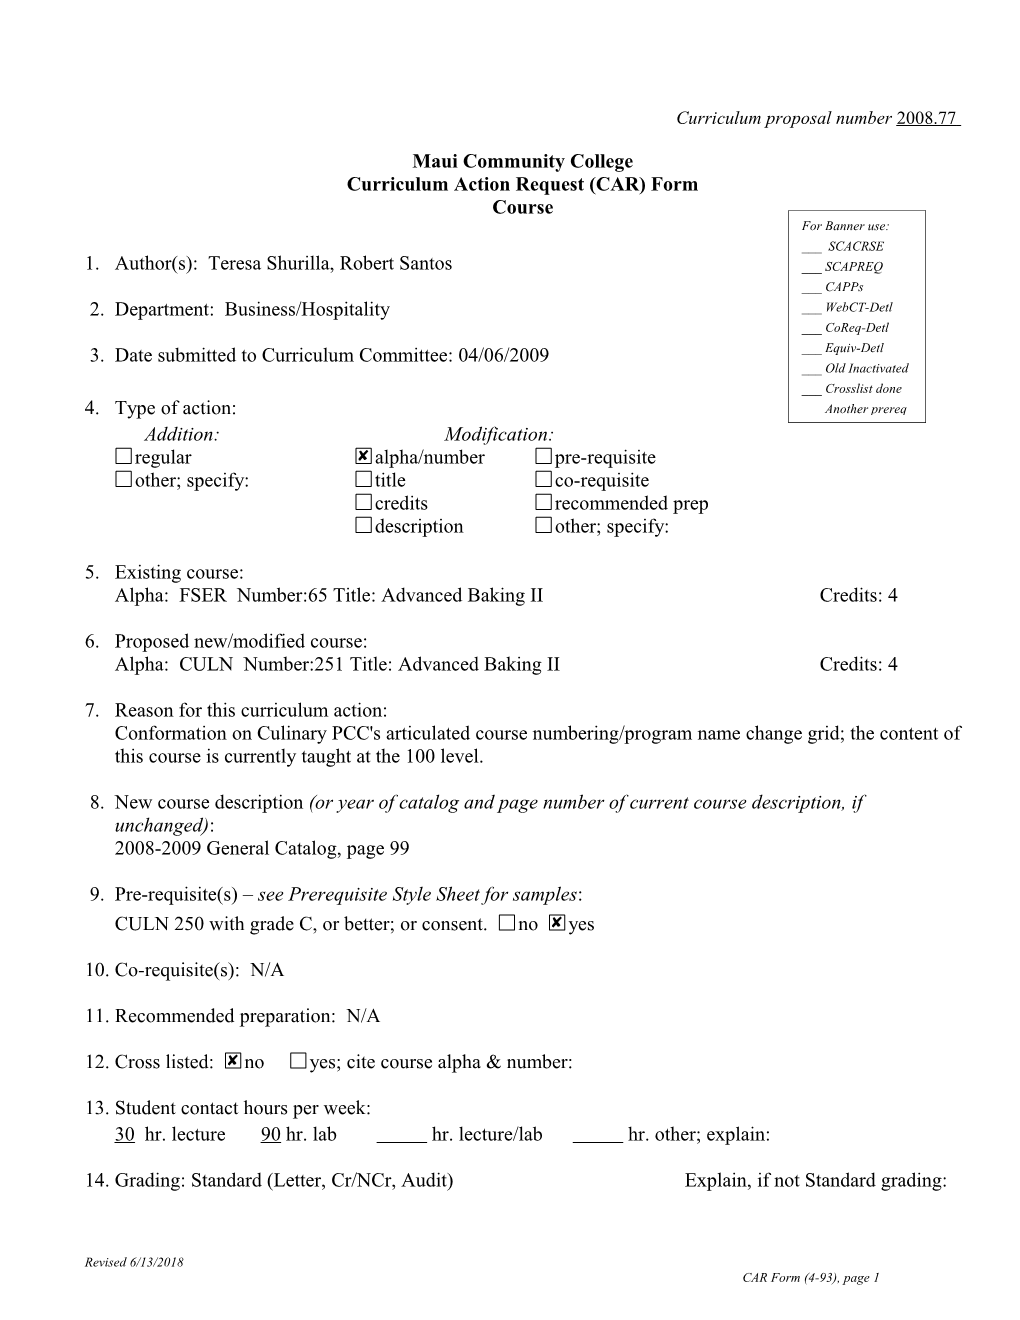 Curriculum Proposal Number 2008